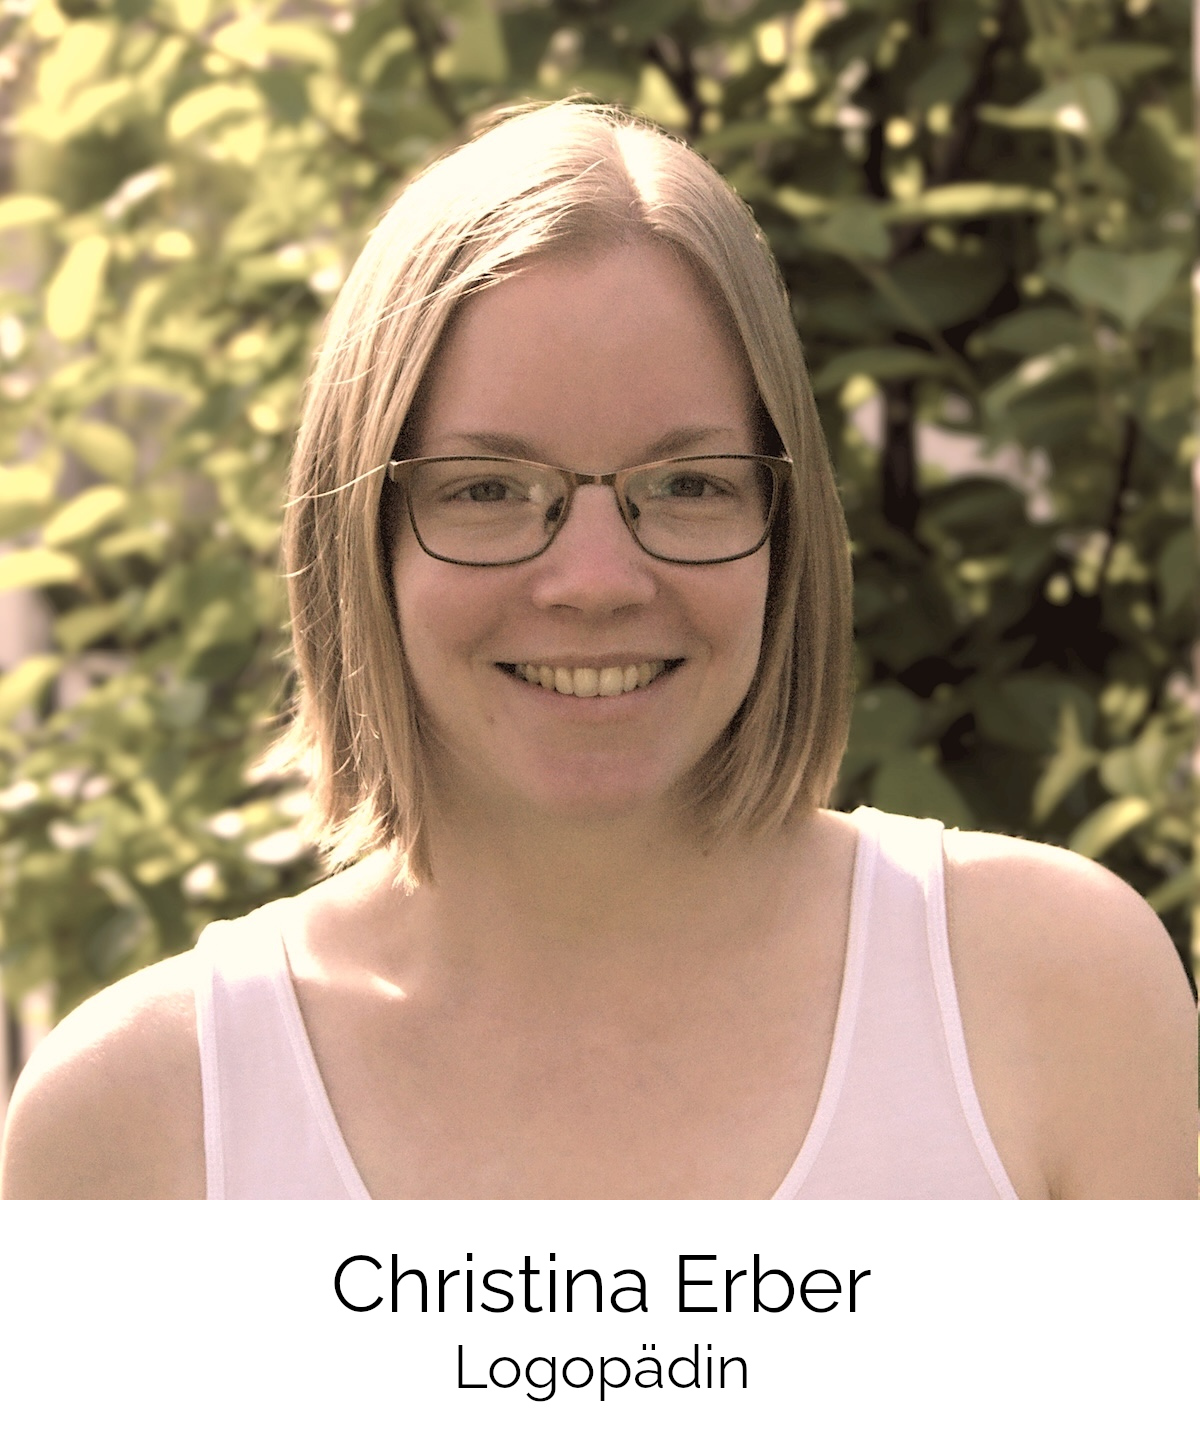 Christina Erber